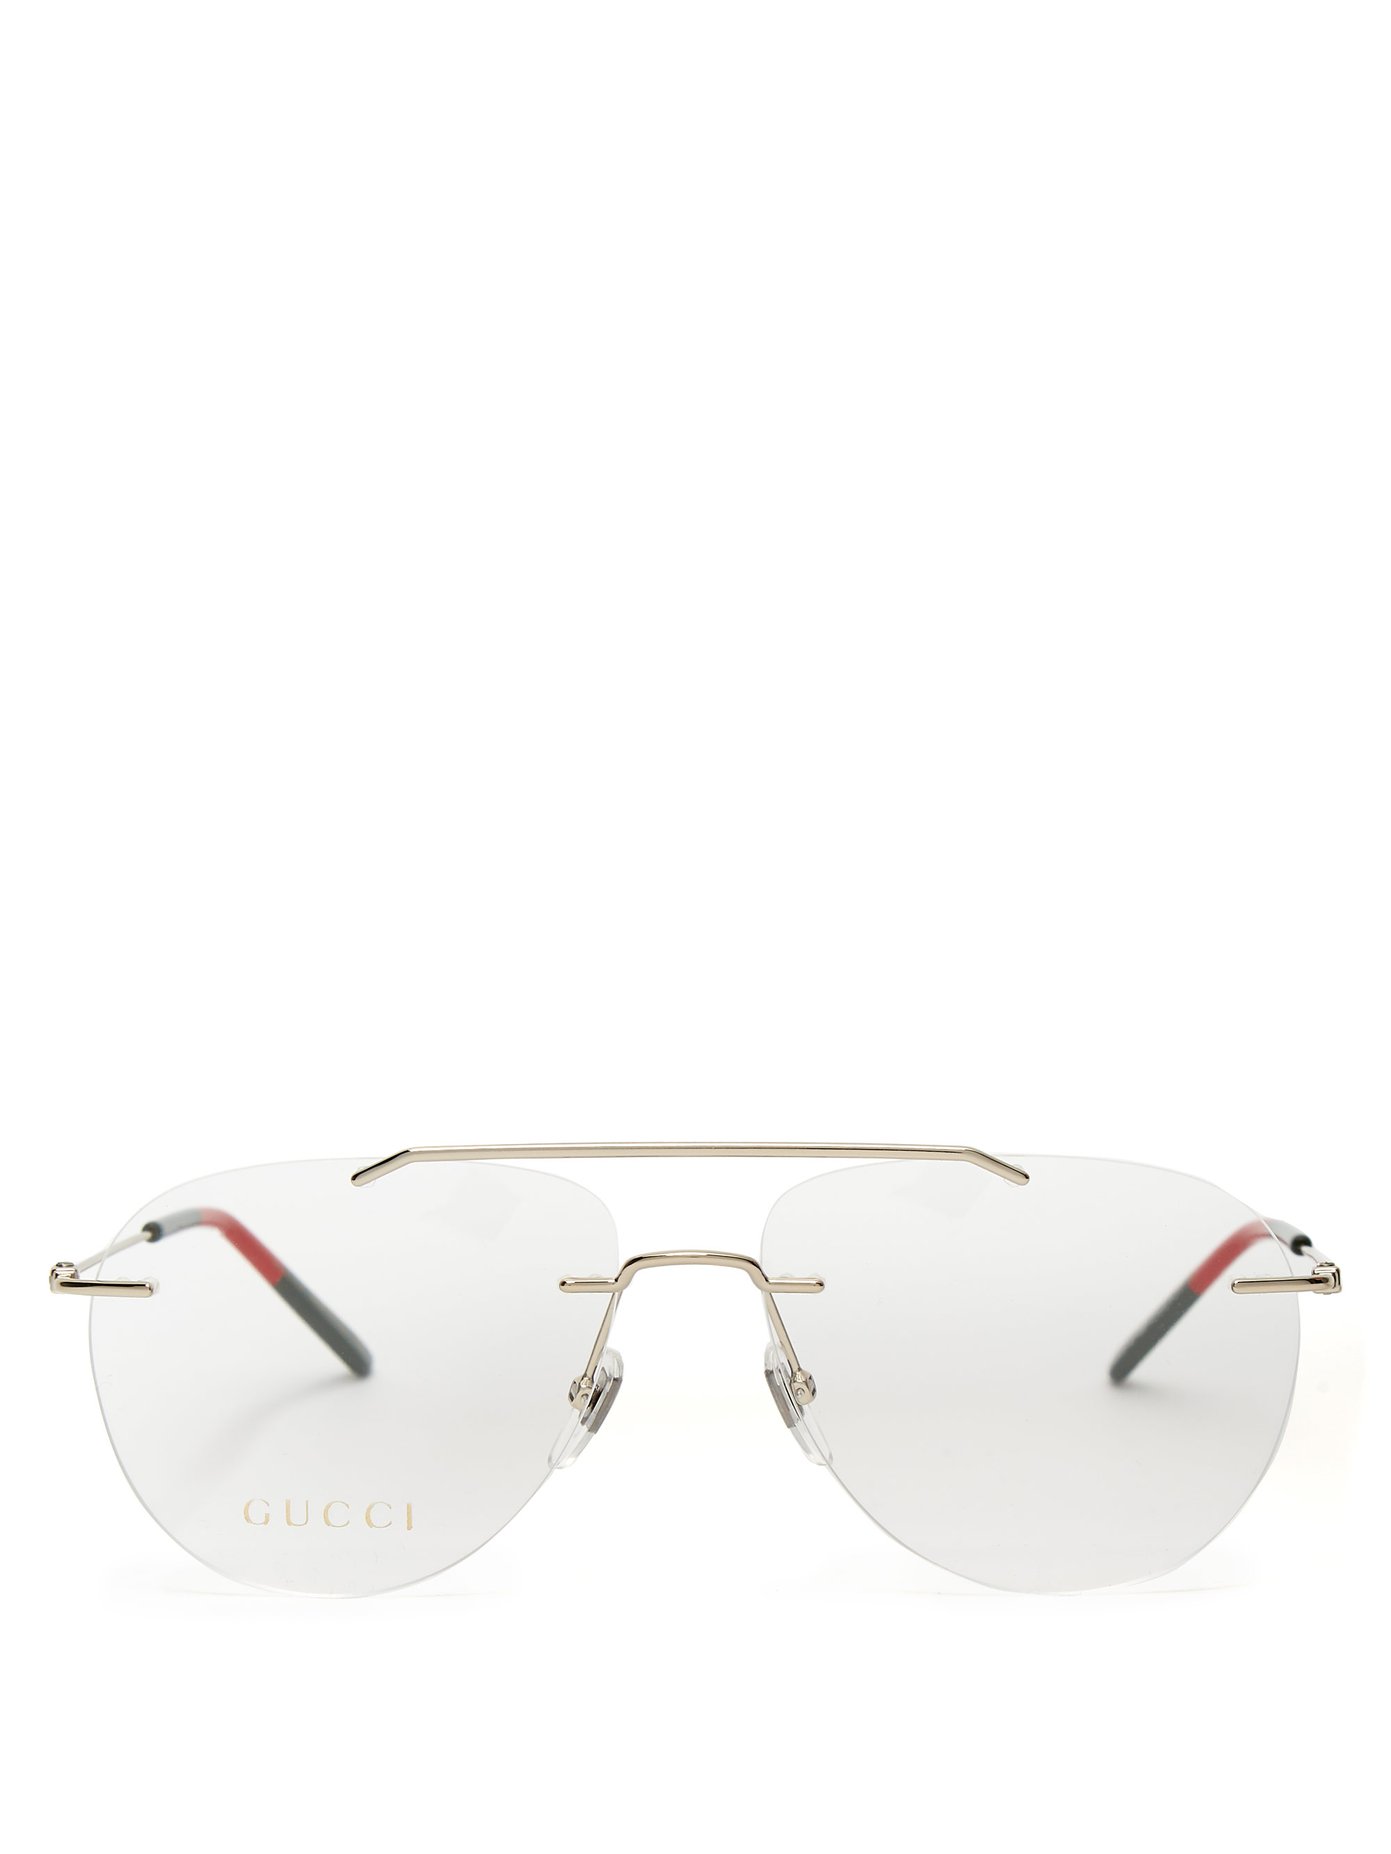 gucci frameless sunglasses